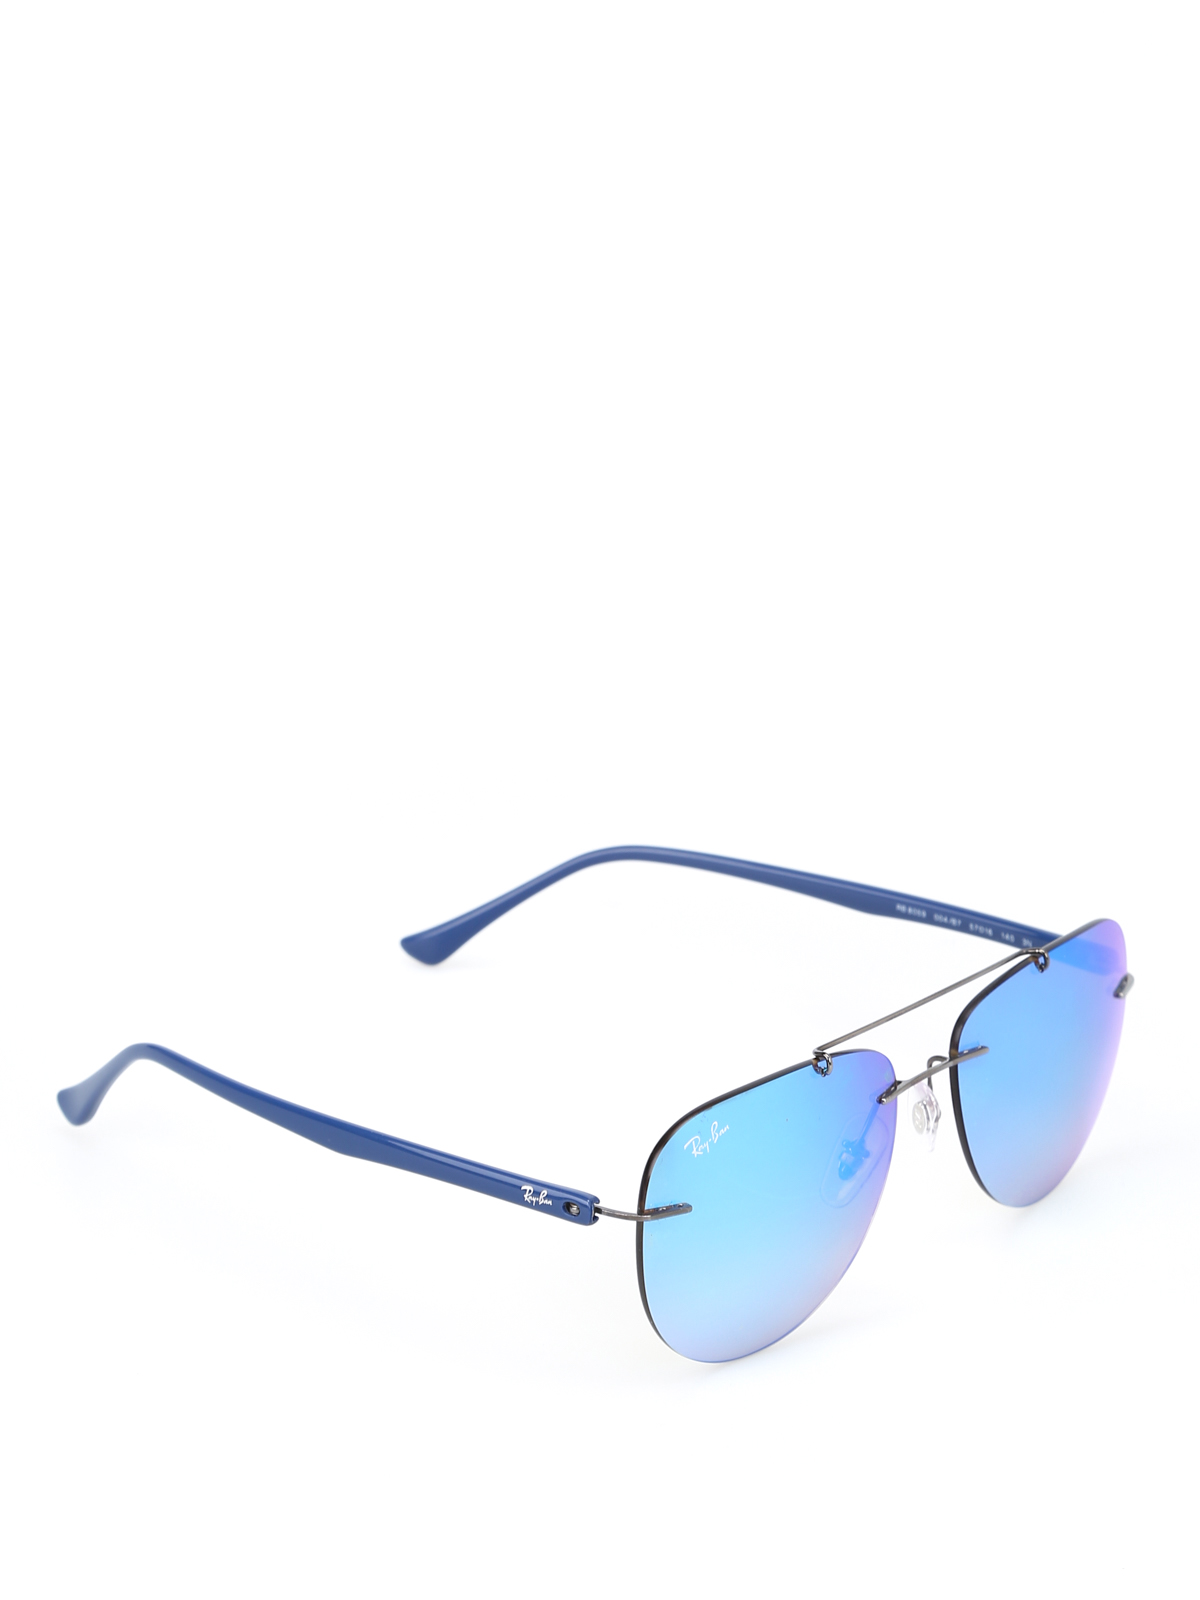 blue lens ray ban sunglasses